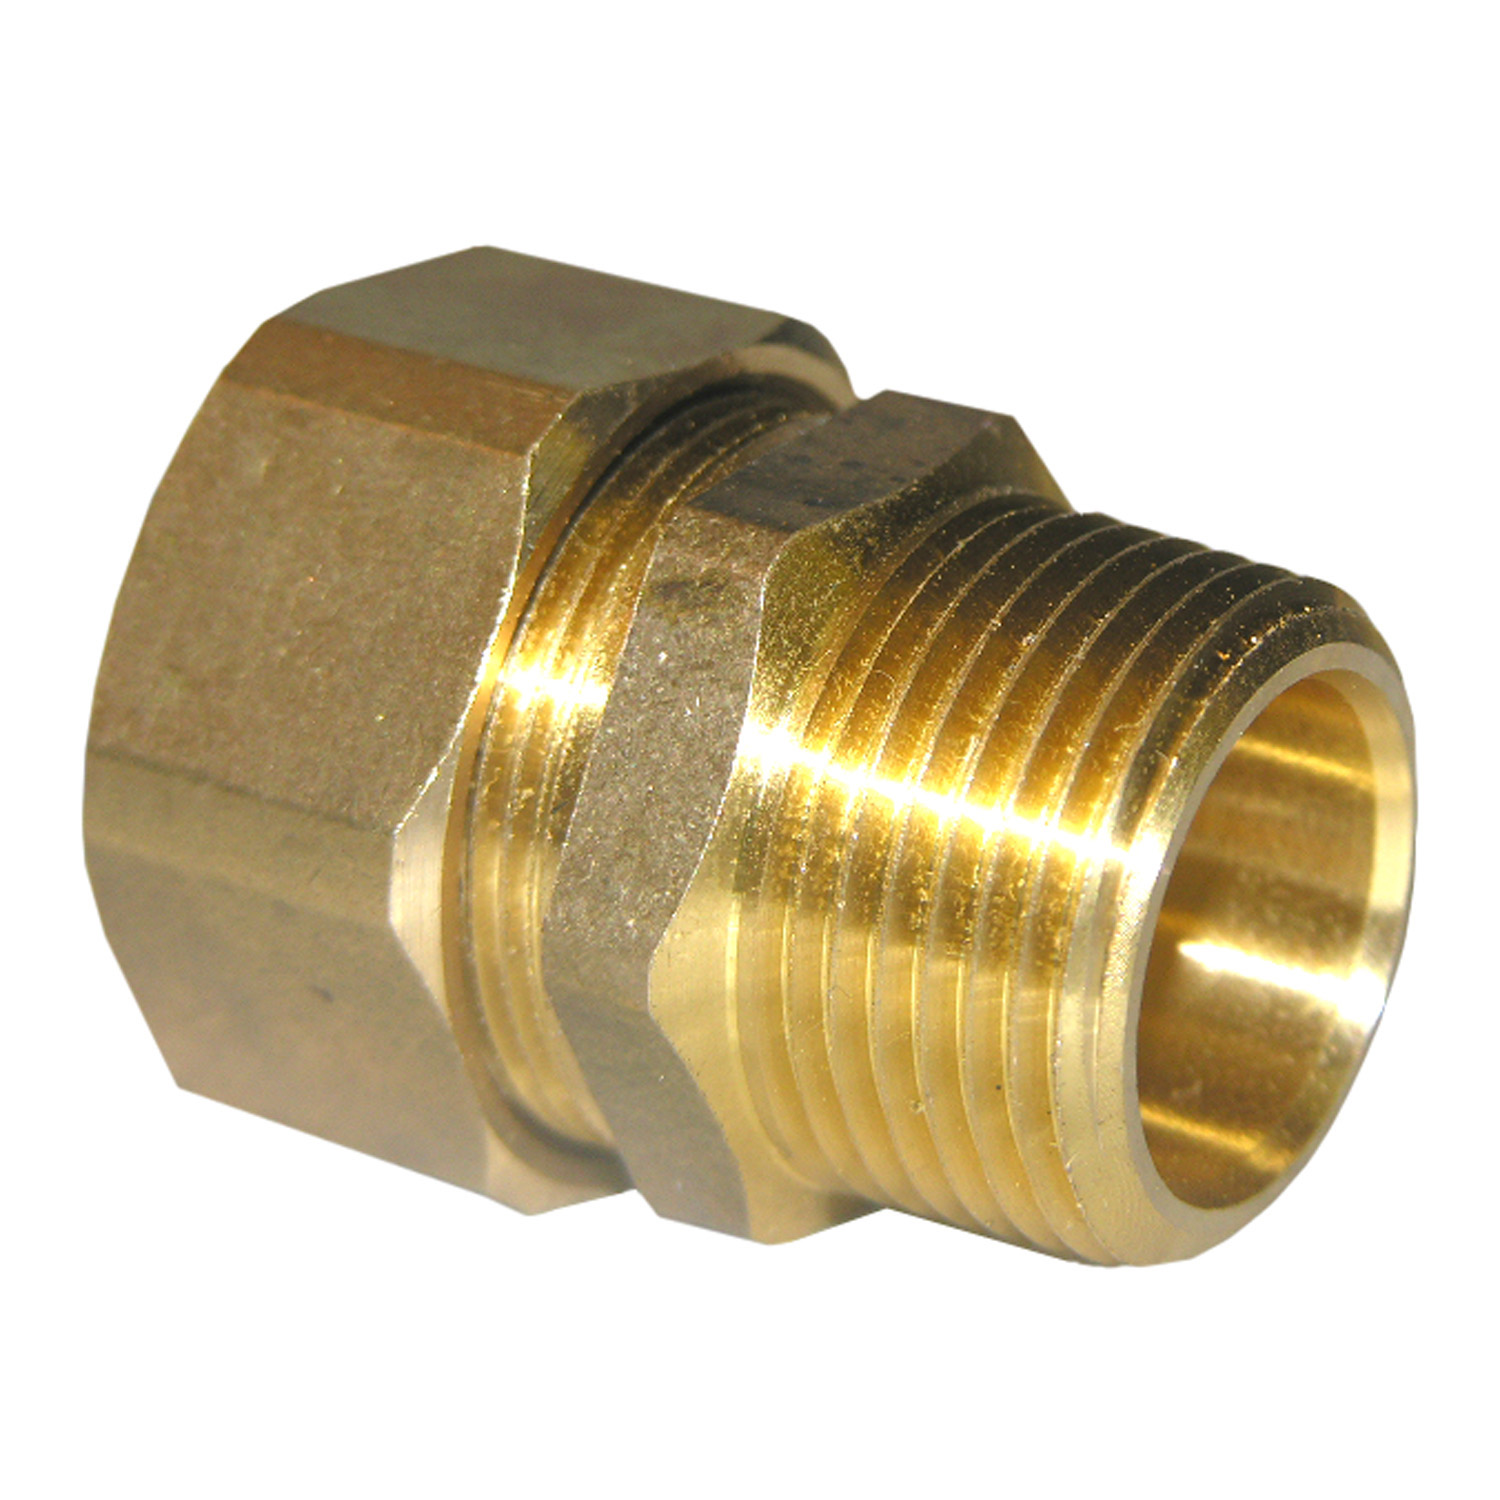 17-6871 Pipe Adapter, 7/8 x 3/4 in, Compression x MPT, Brass, 200 psi Pressure